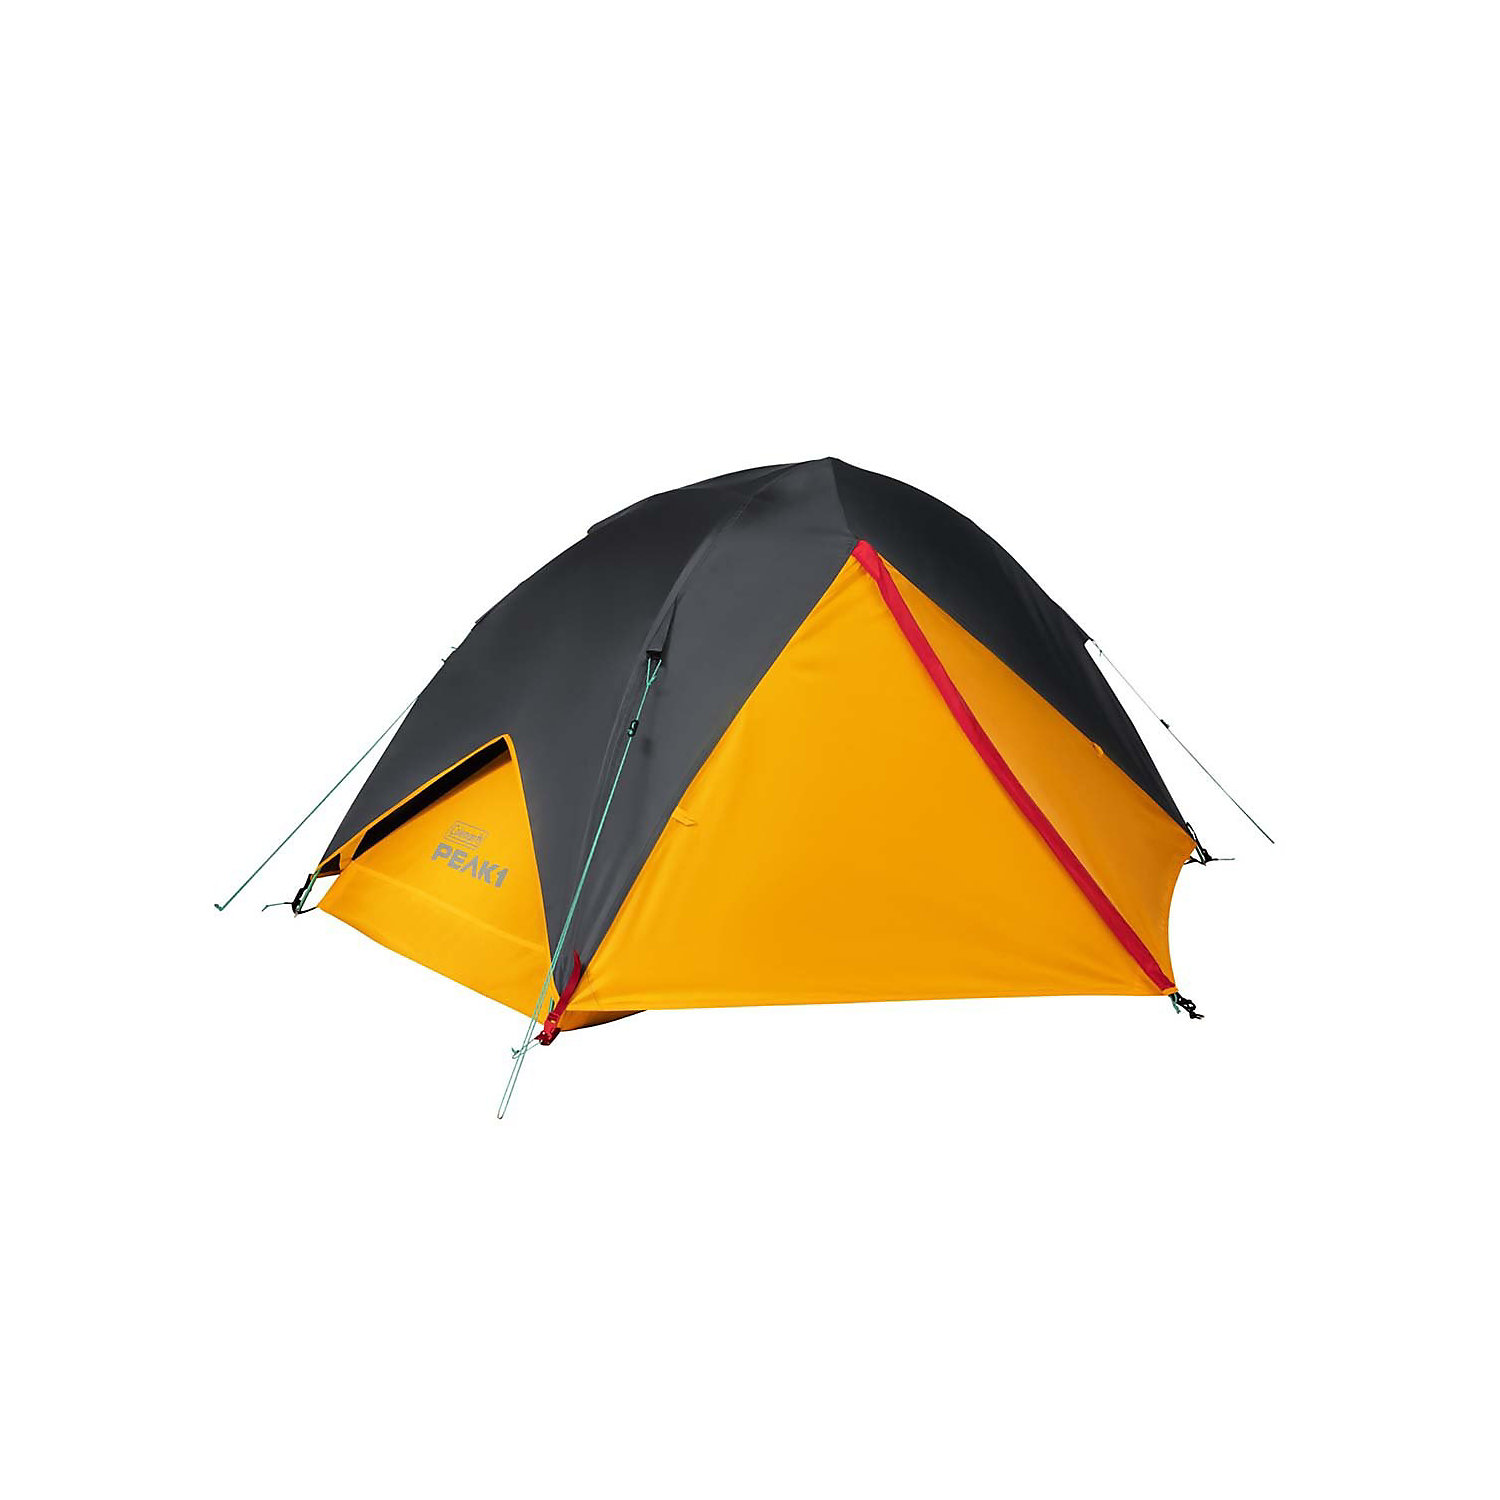 Coleman Peak 1 1P Backpacking Tent